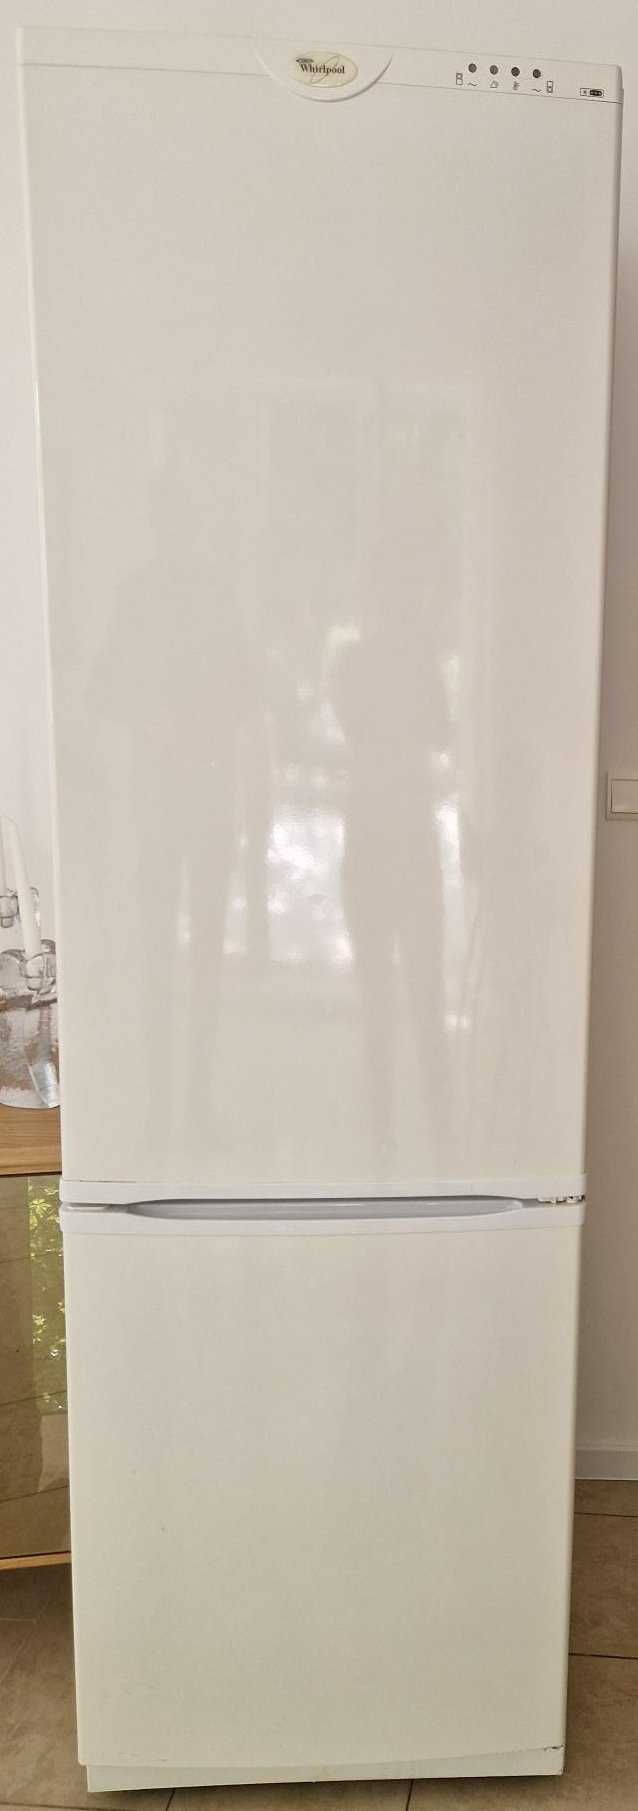 хладилник с фризер Whirlpool втора употреба